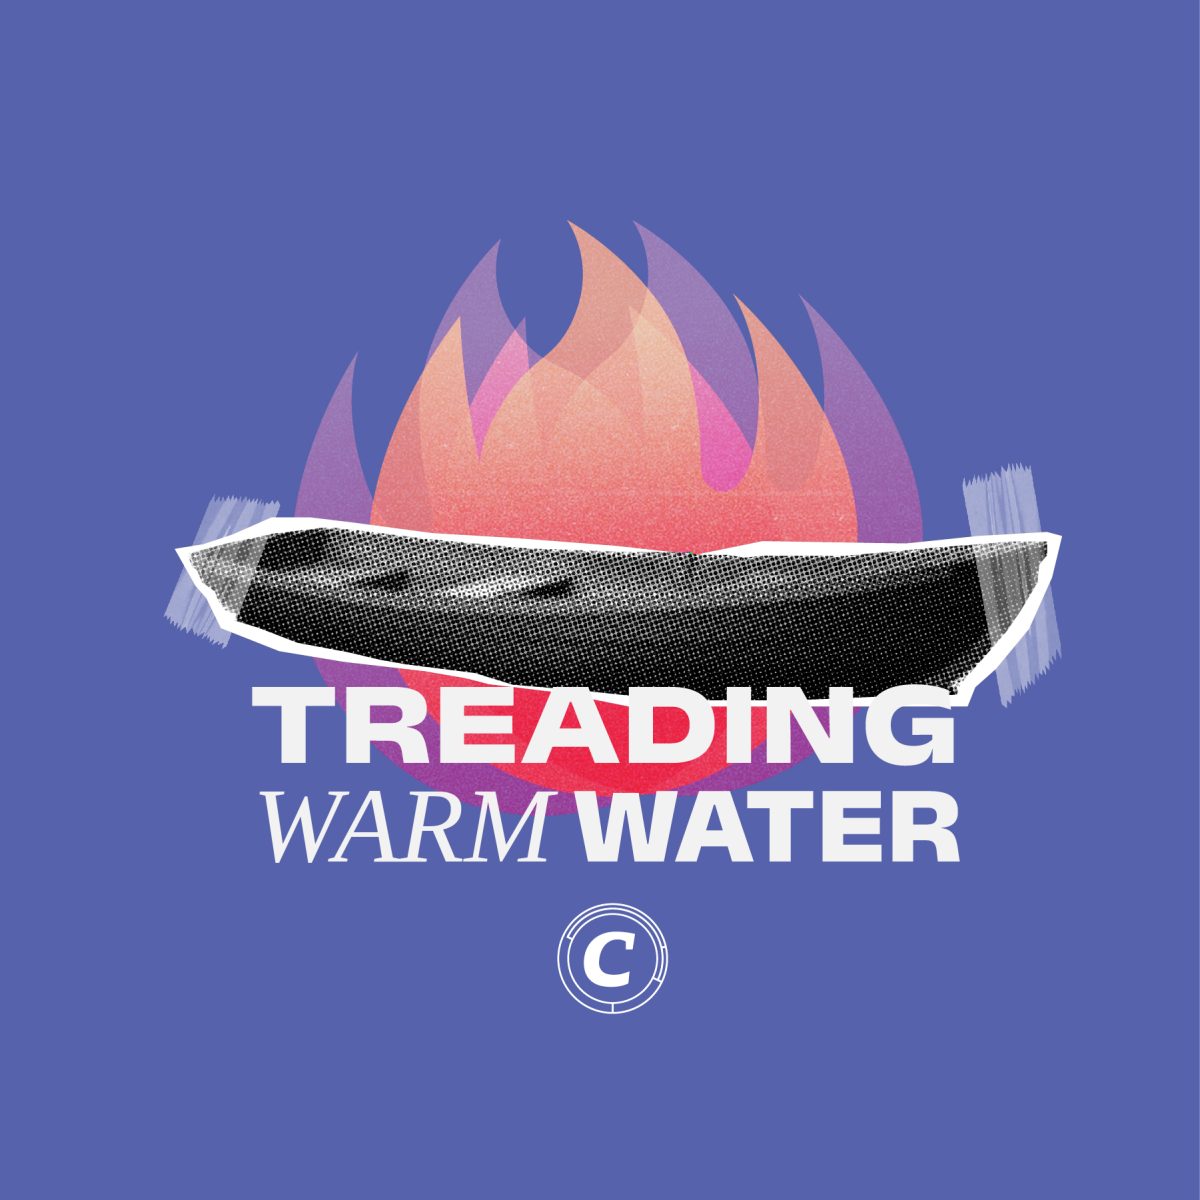 Treading Warm Water: Shaving